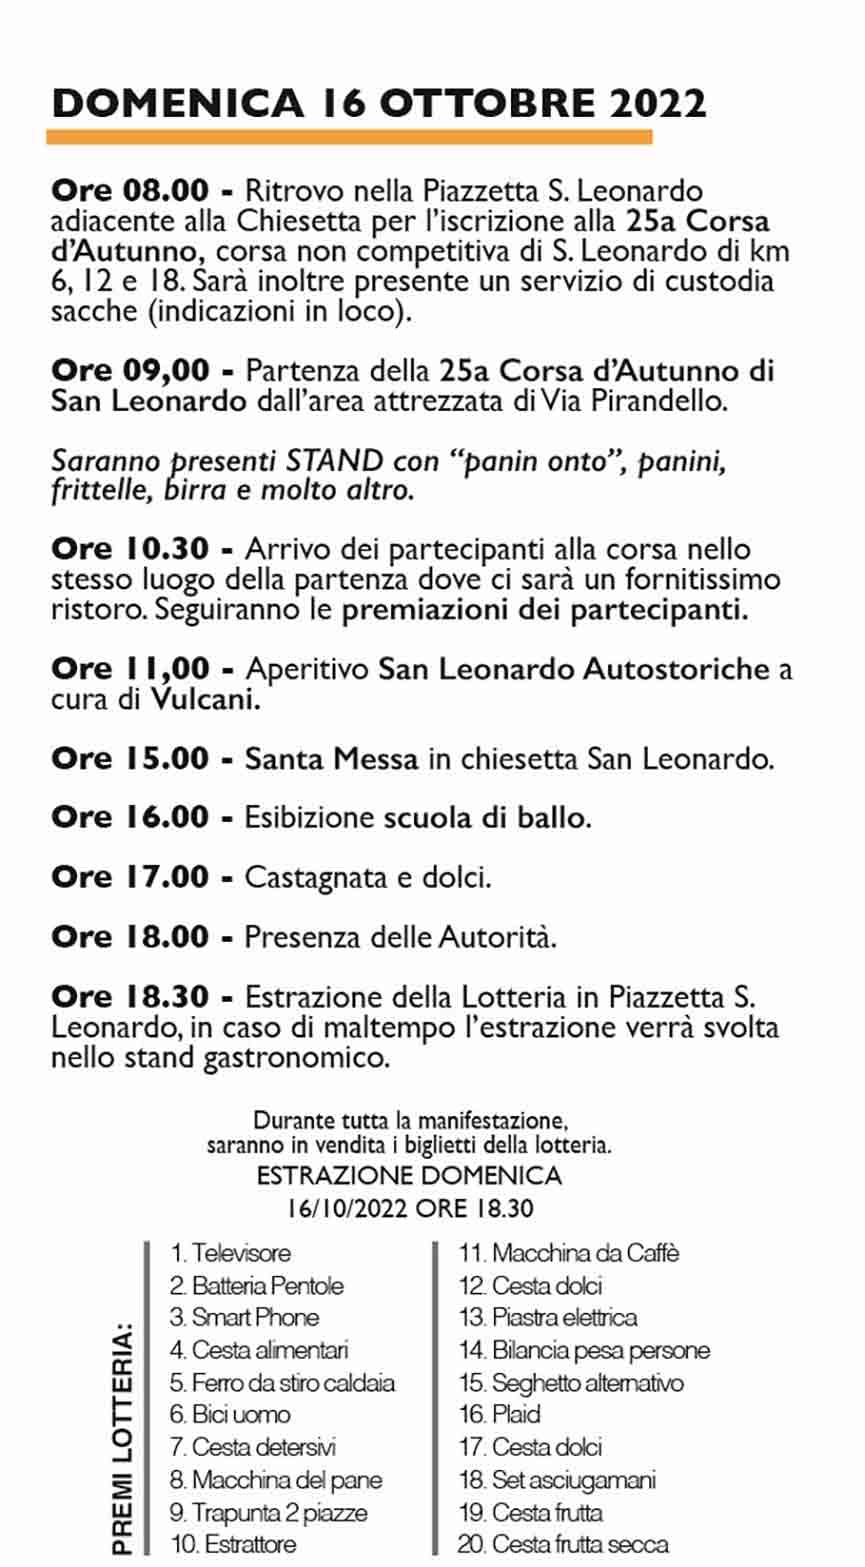 Festa di San Leonardo Orgnano Spinea Venezia